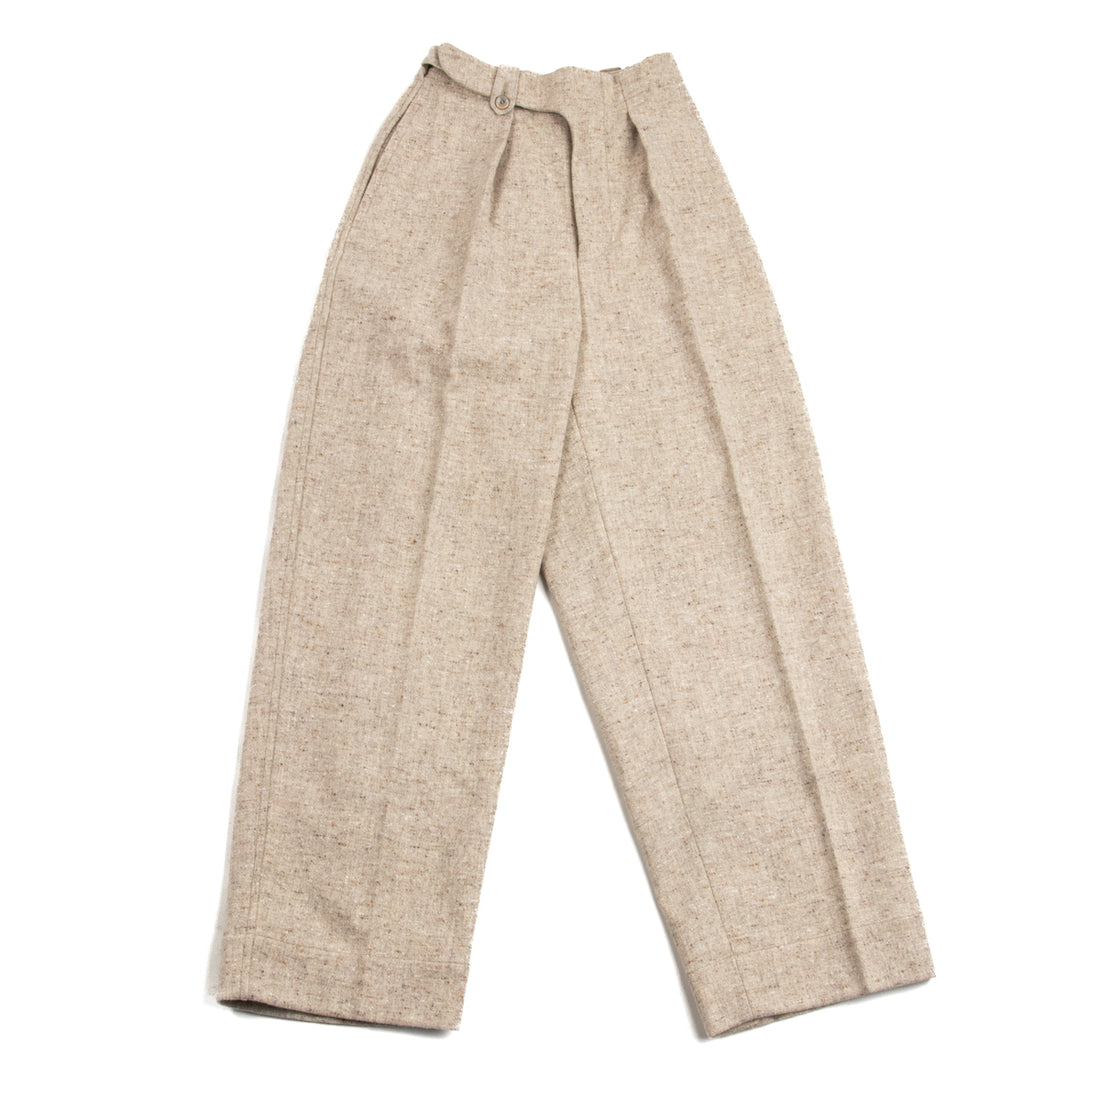 MotivMfg Sidewinder Trousers - Marling & Evans Natural Wool Serge / Ecru - Standard & Strange